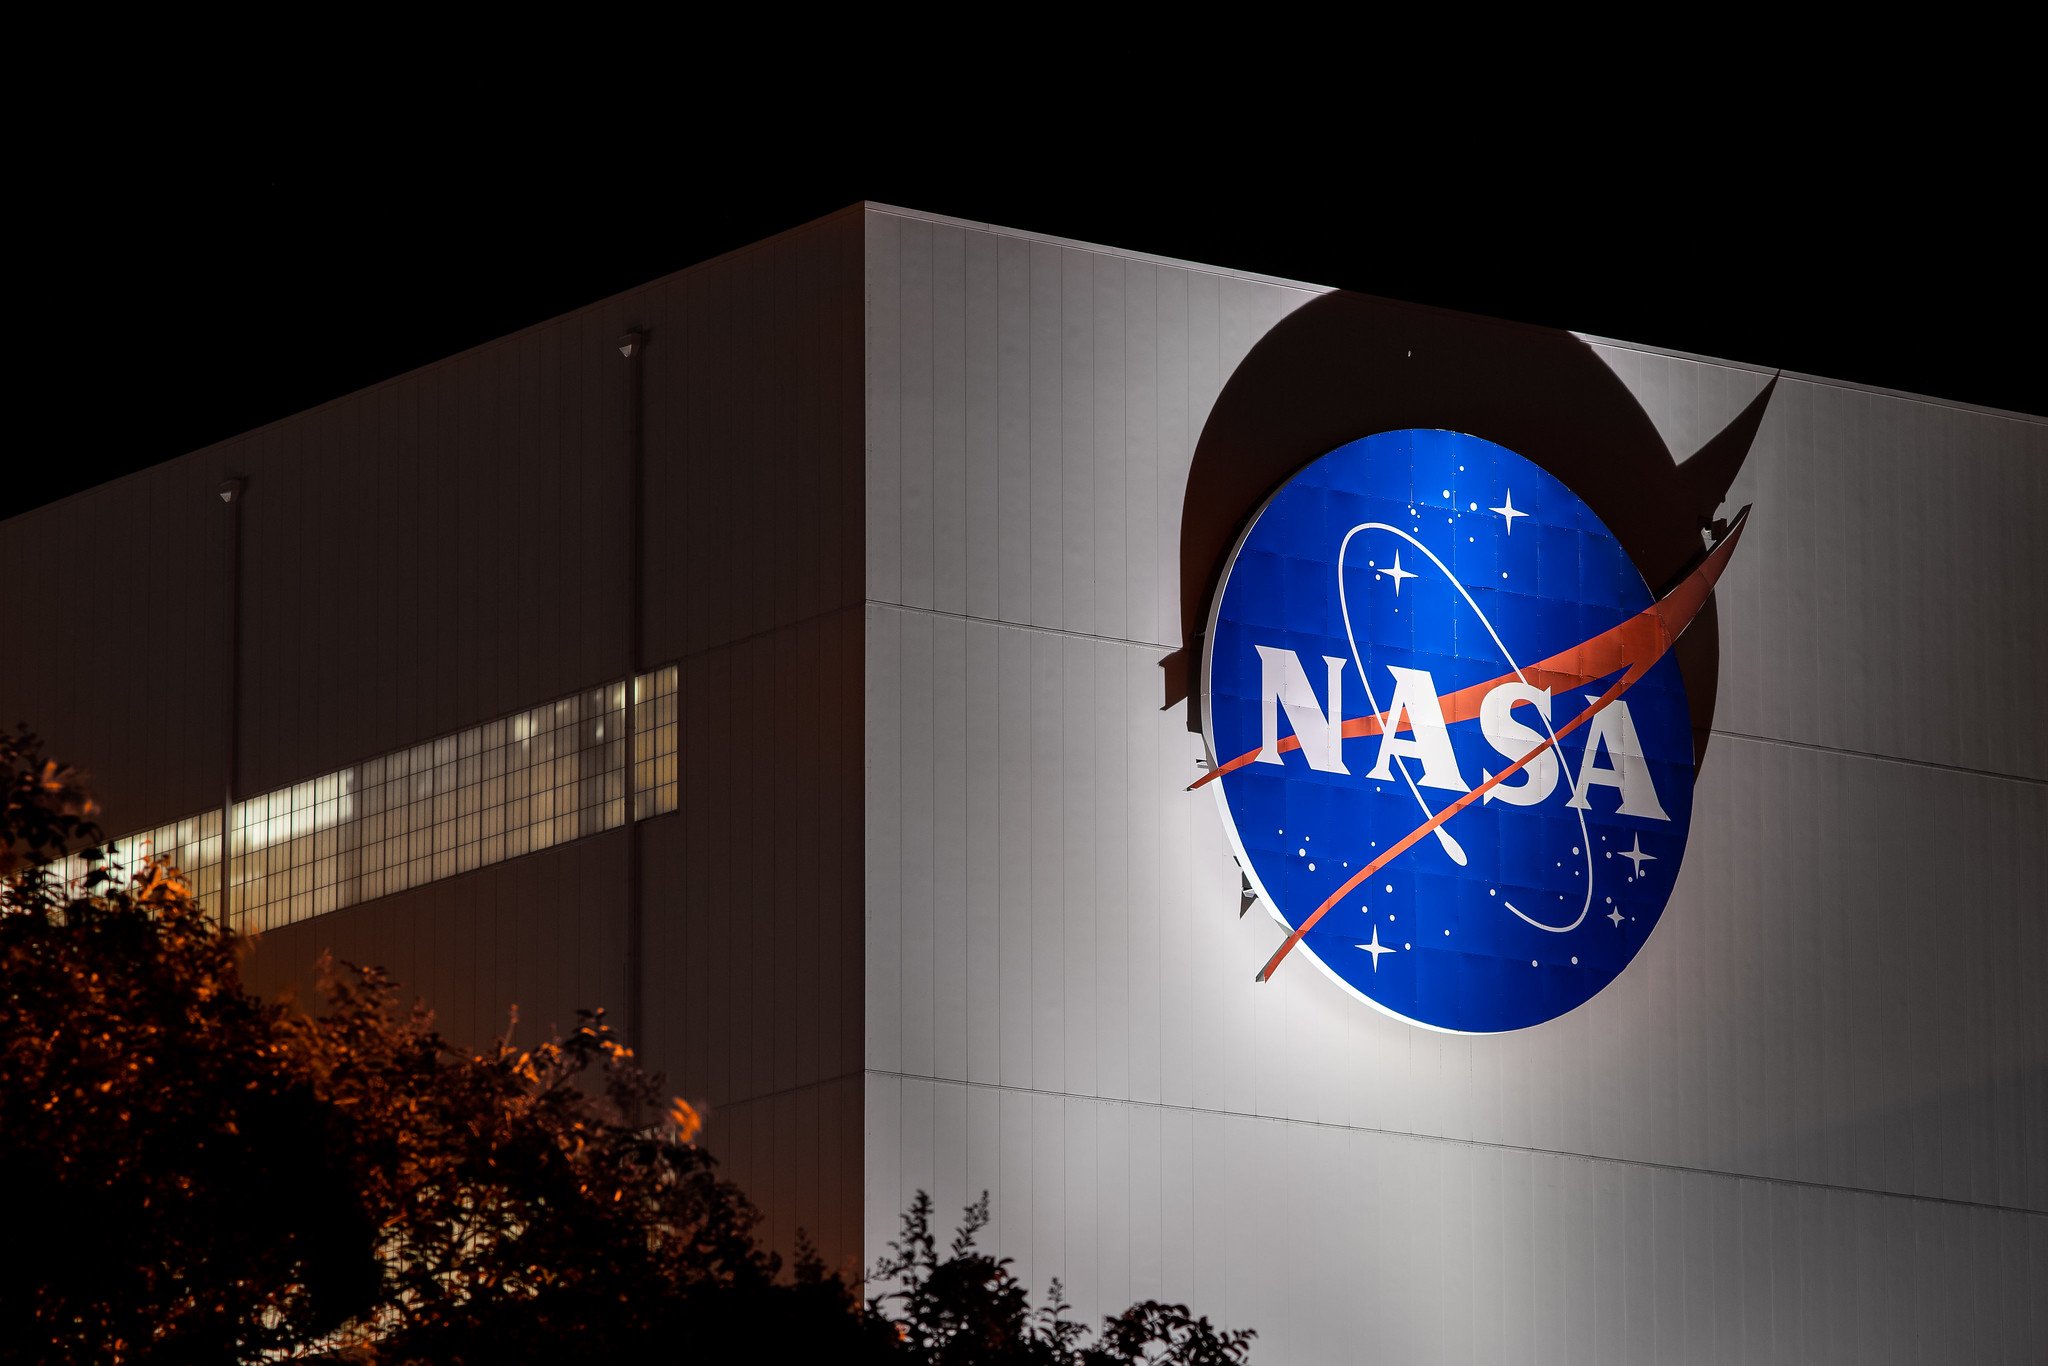 NASA Michoud Assembly Facility in New Orleans, LA